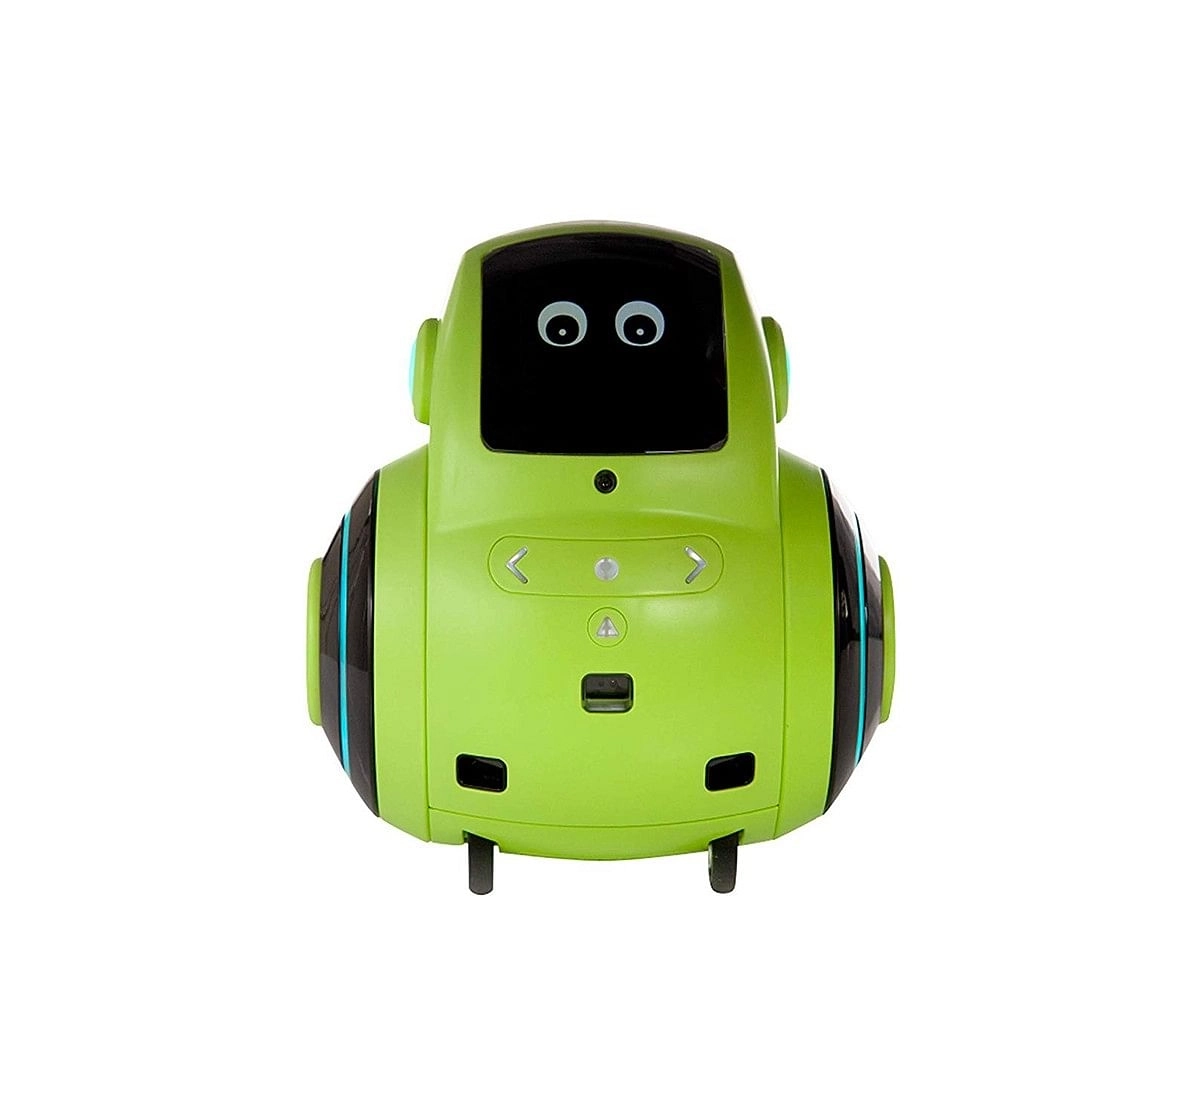 Miko 2 My Companion Robot - Green Robotics for Kids age 5Y+ (Green)